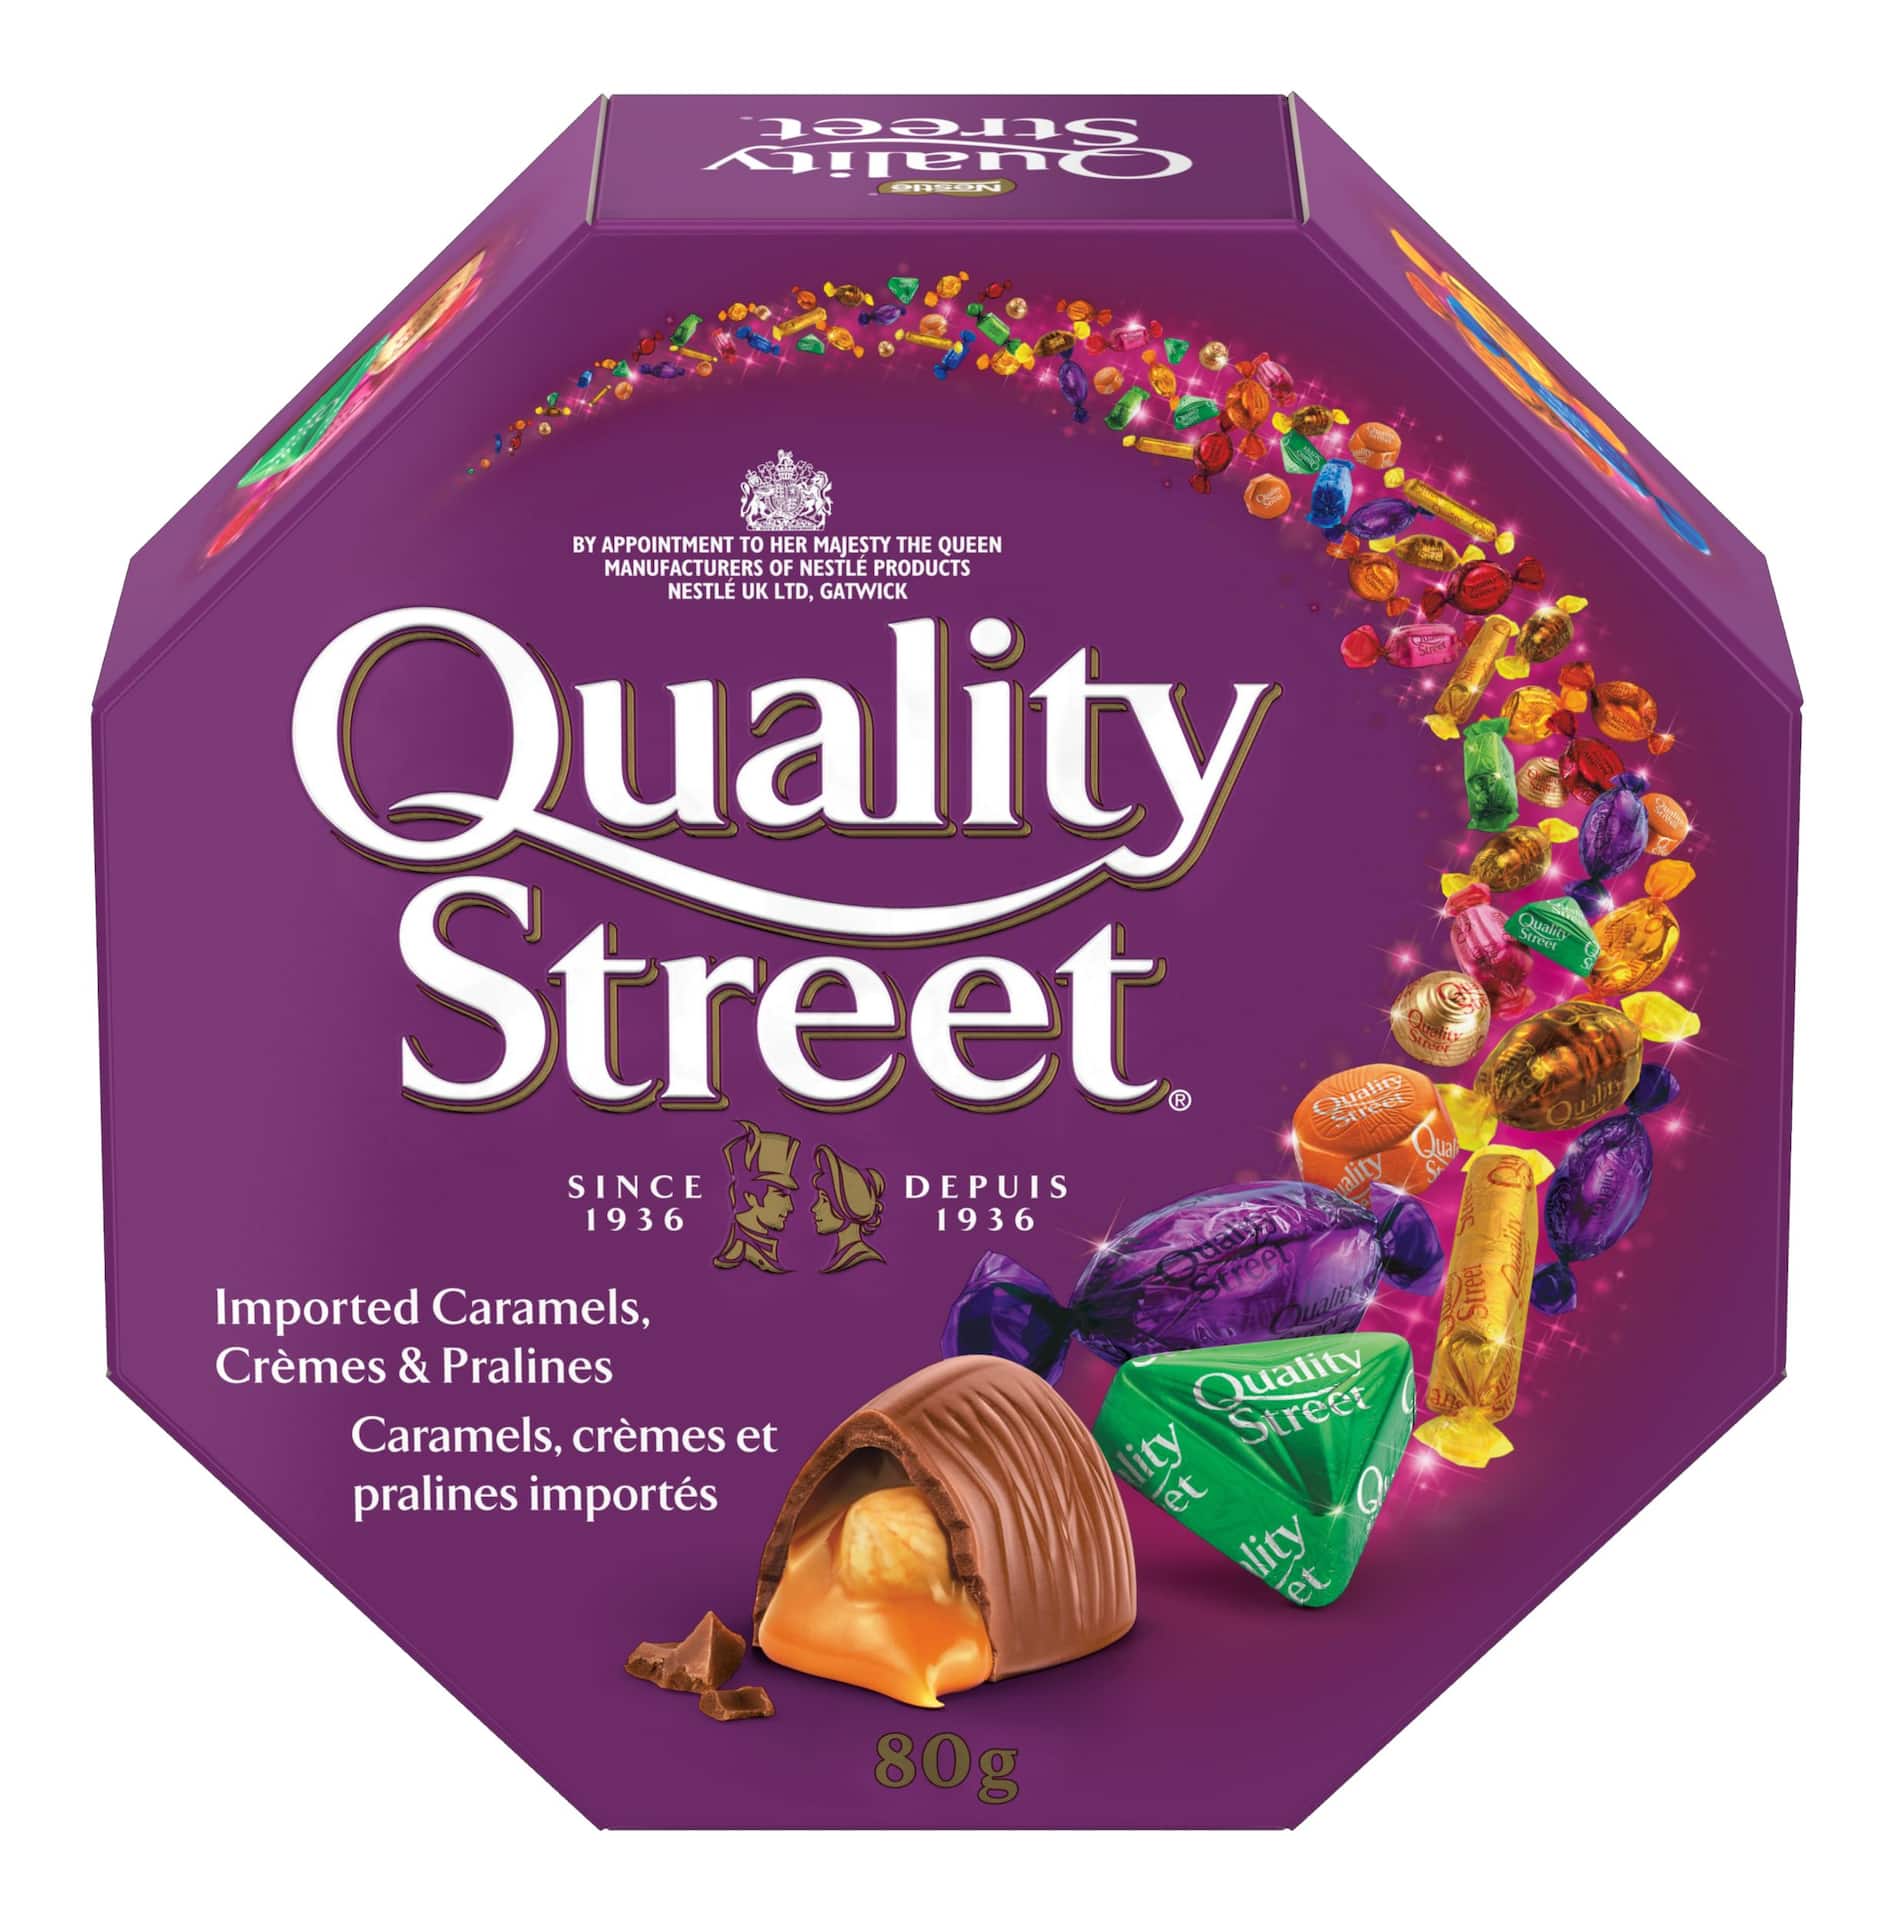 Quality Street Caramel and Chocolate Tin, 650-g